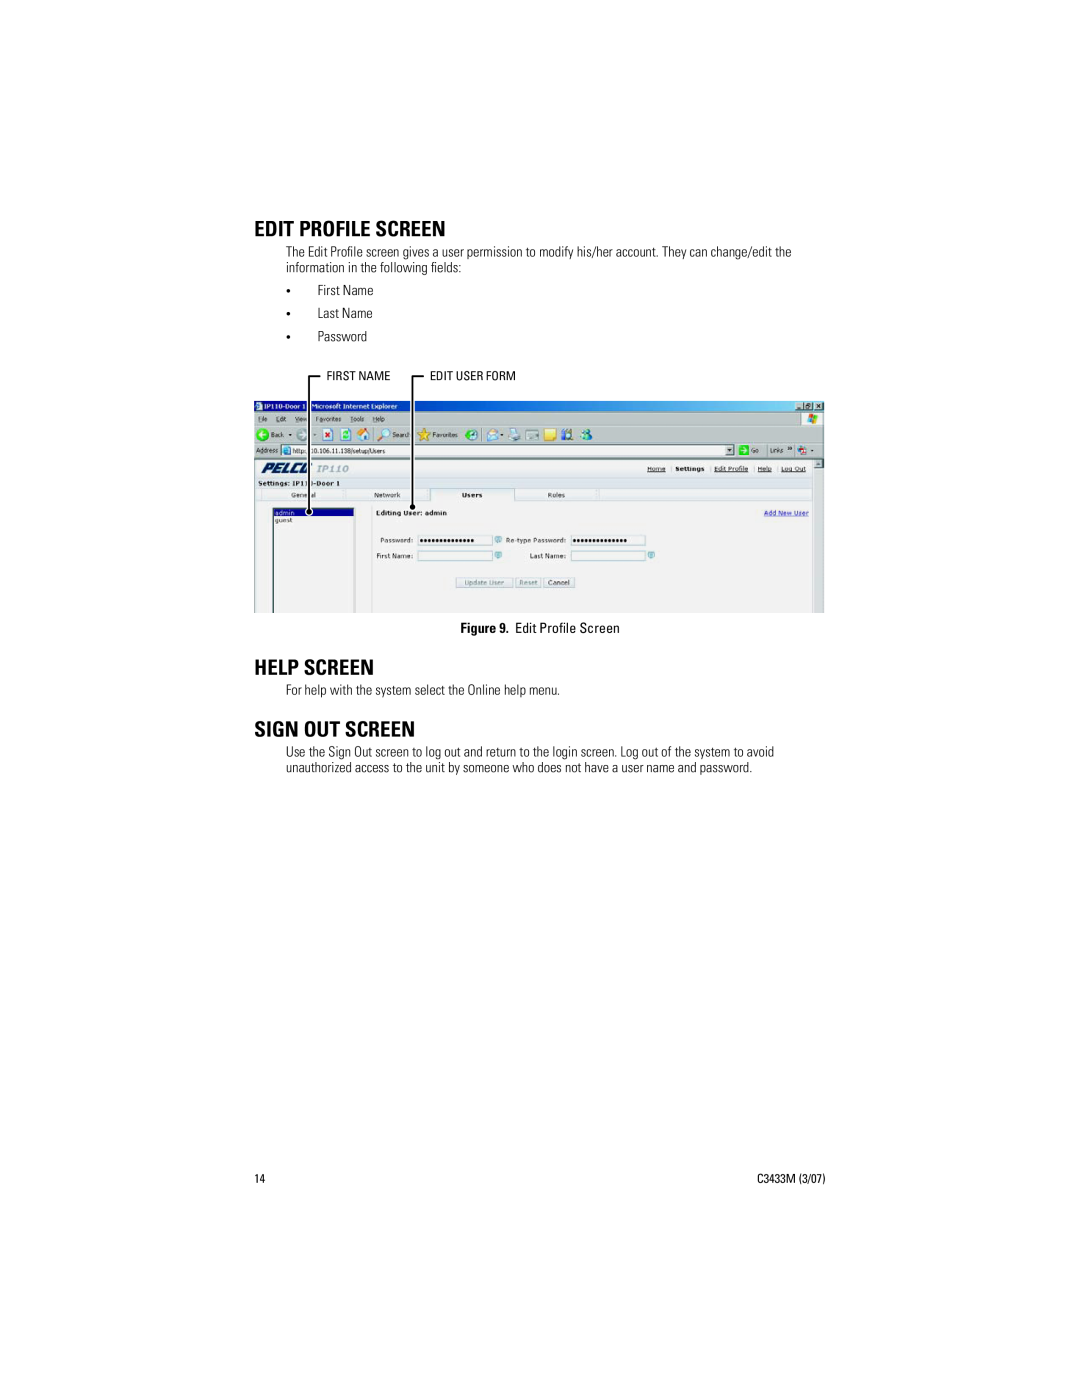 Pelco C3433M (3/07) manual Edit Profile Screen, Help Screen, Sign Out Screen 